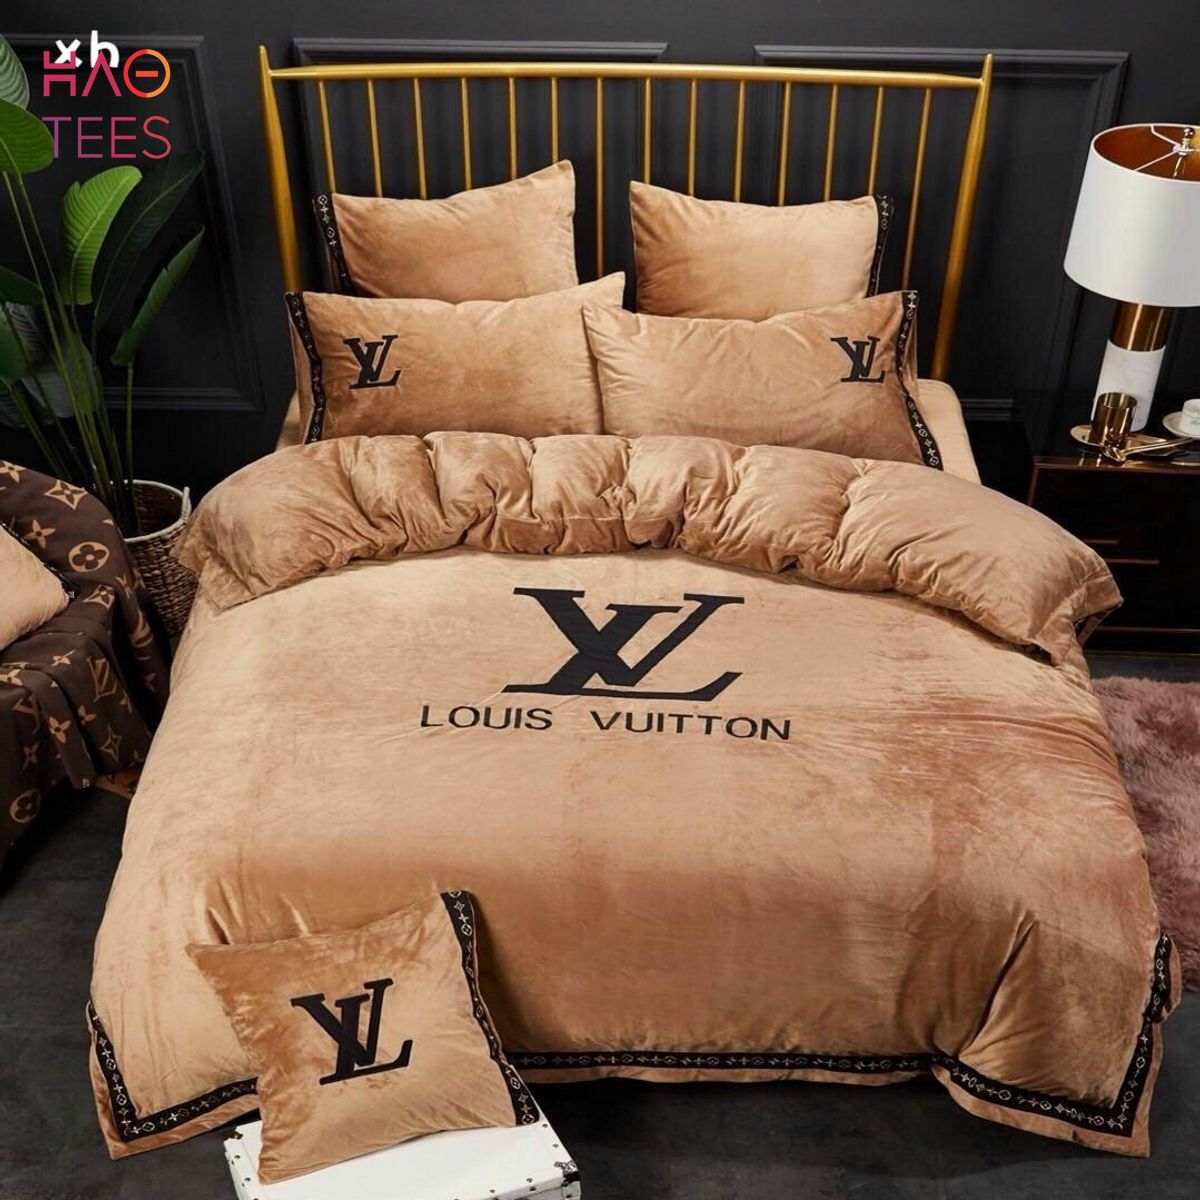 HOT LV Louis Vuitton bedding set 100% New